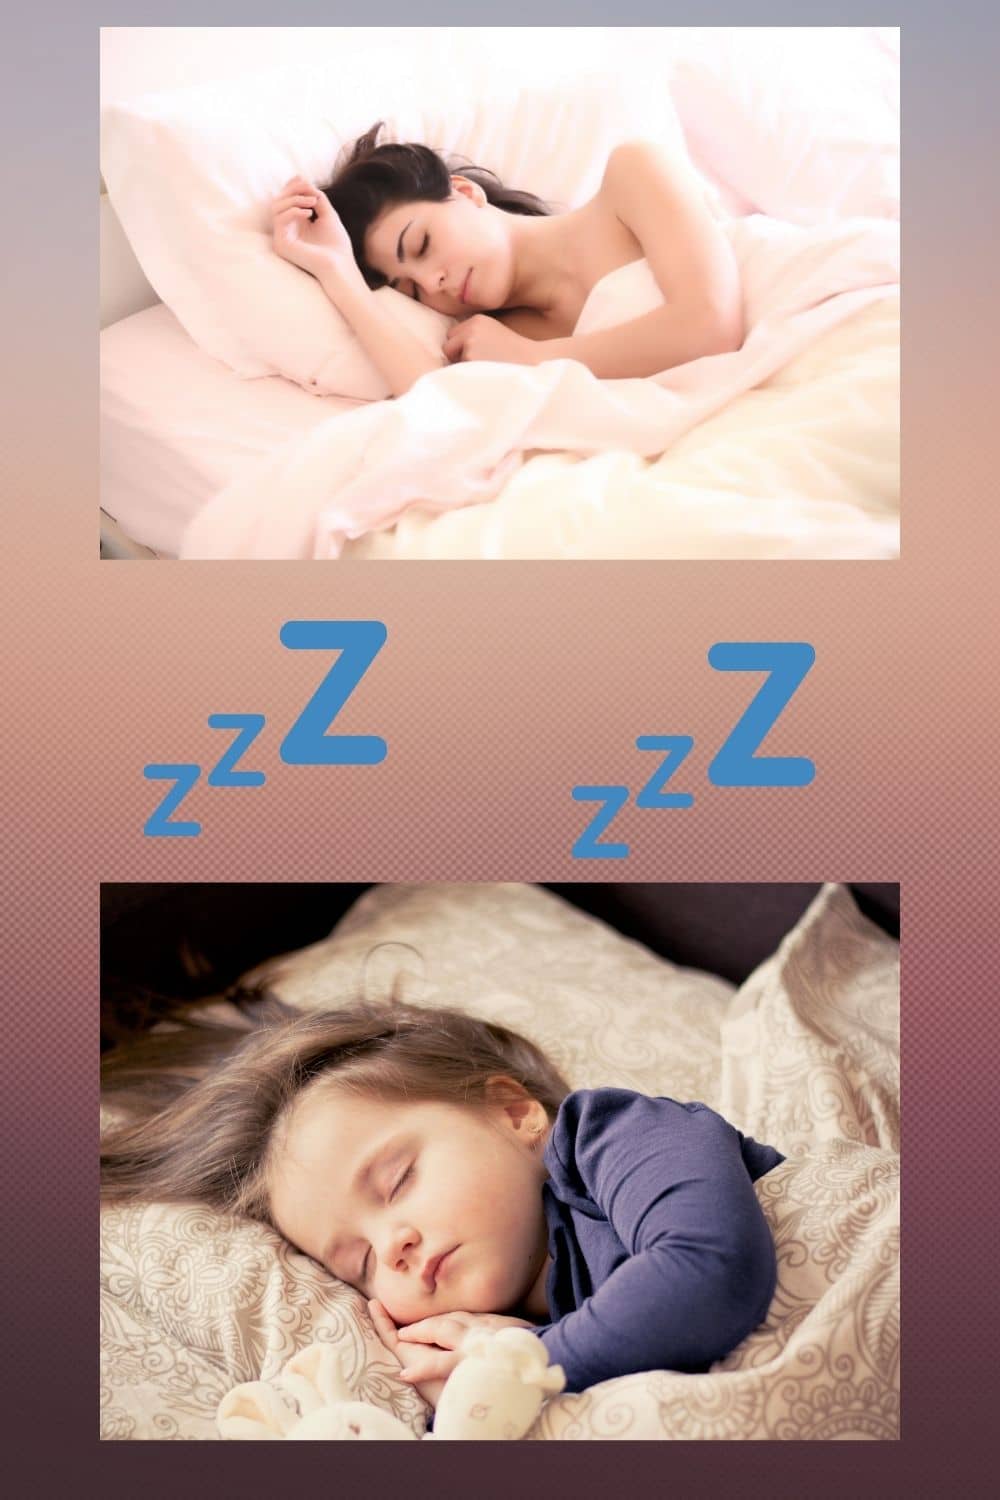 Natural Sleep tips and tricks